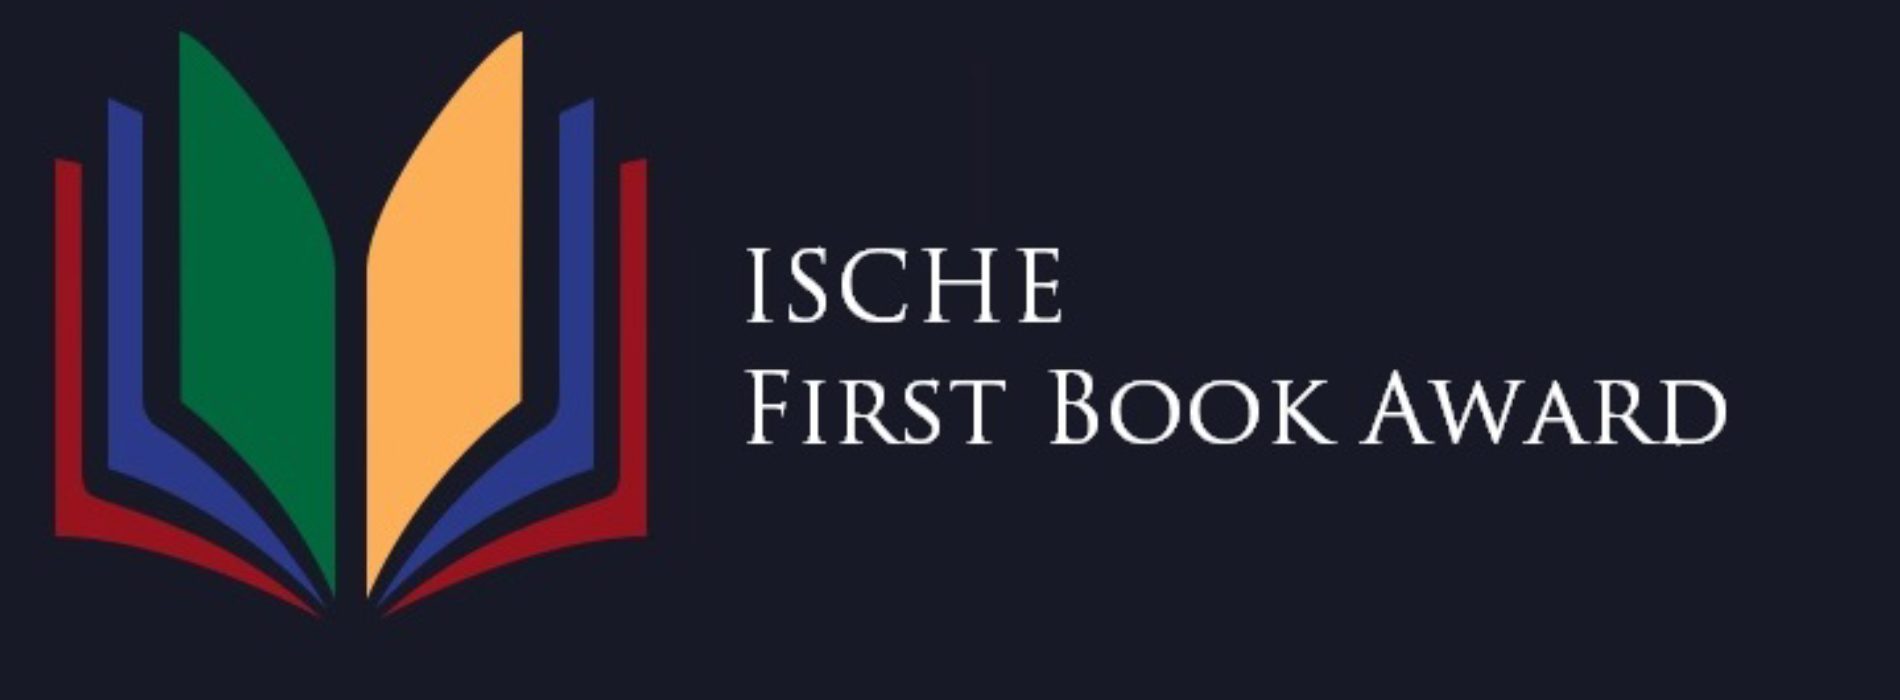 ISCHE First Book Award